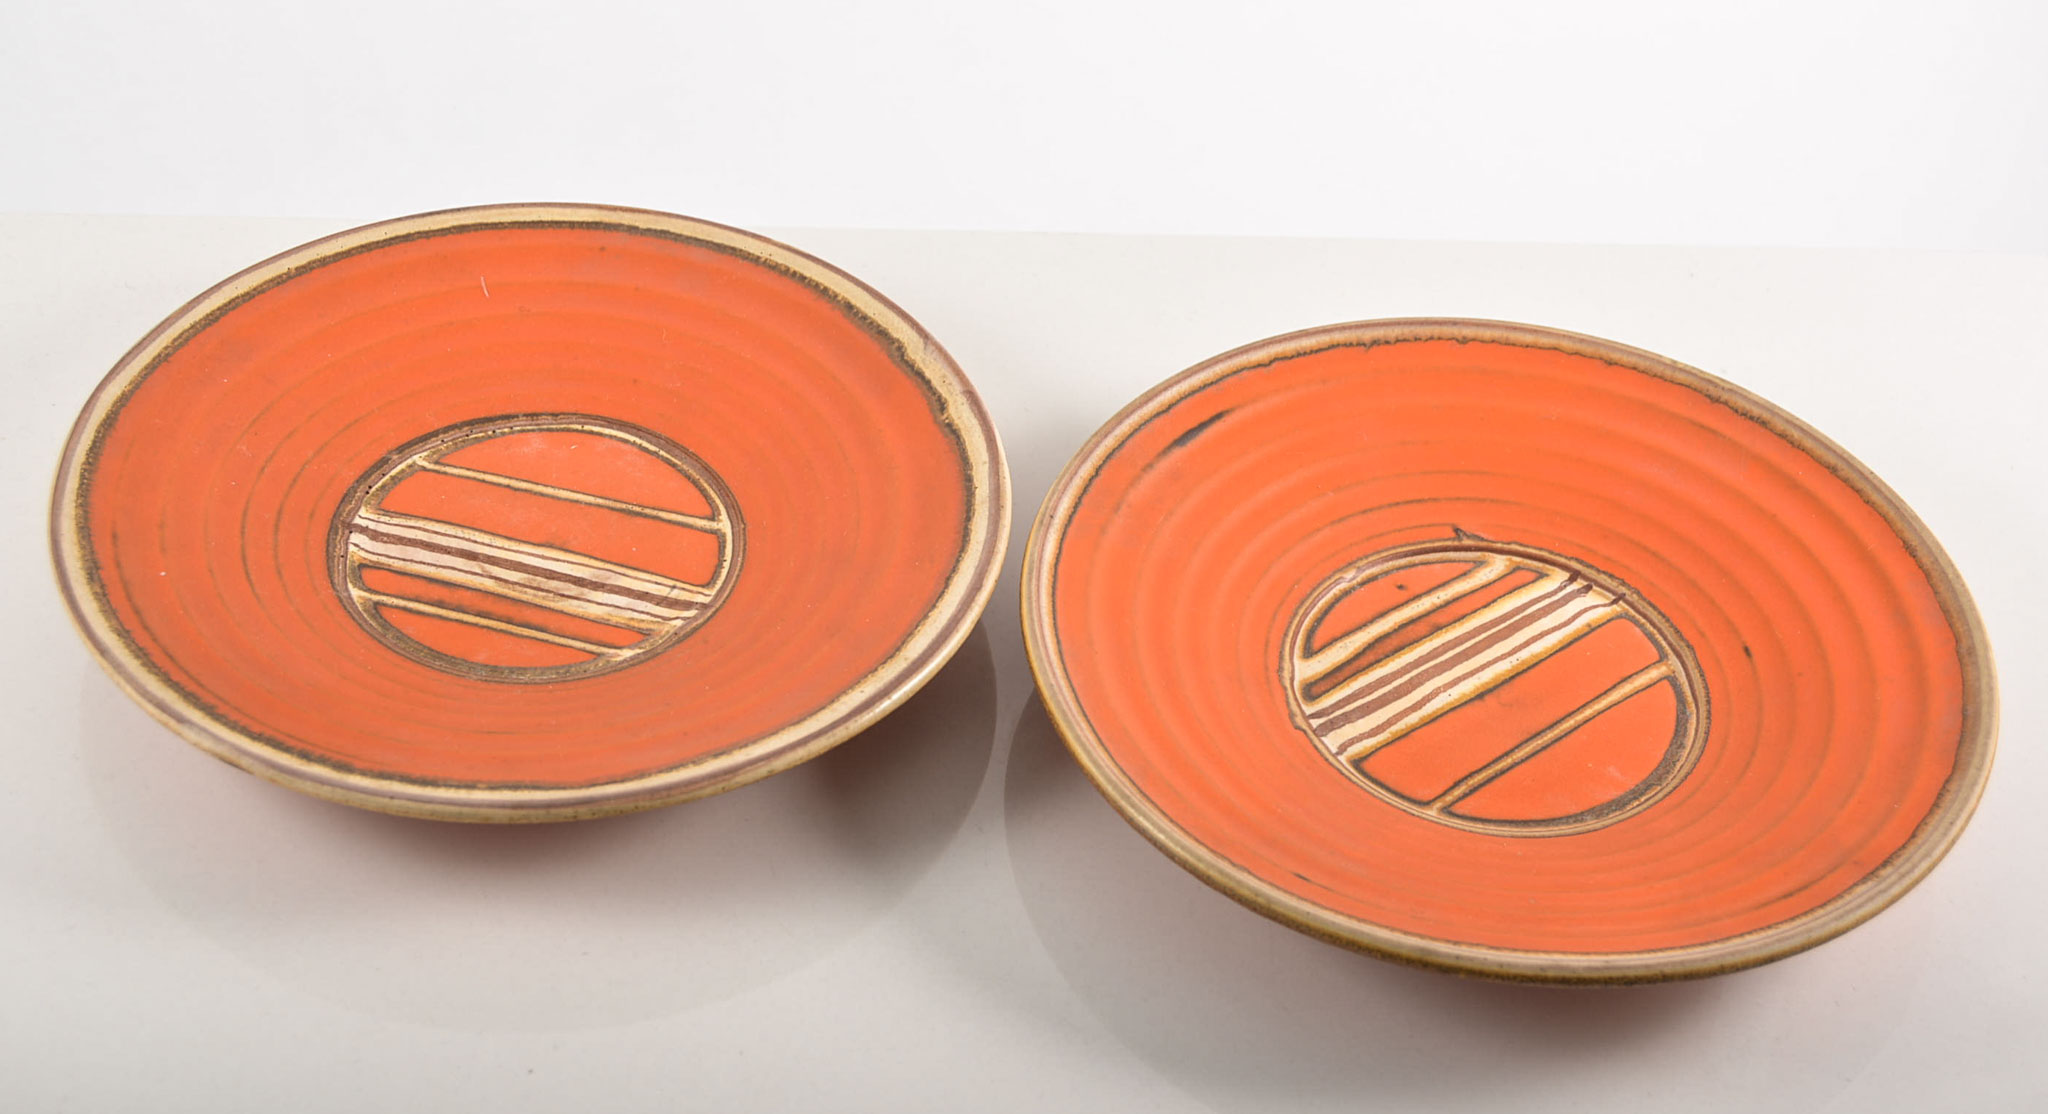 Studio fruit set, circular form with concentric moulded bands, orange glazed, comprising charger,